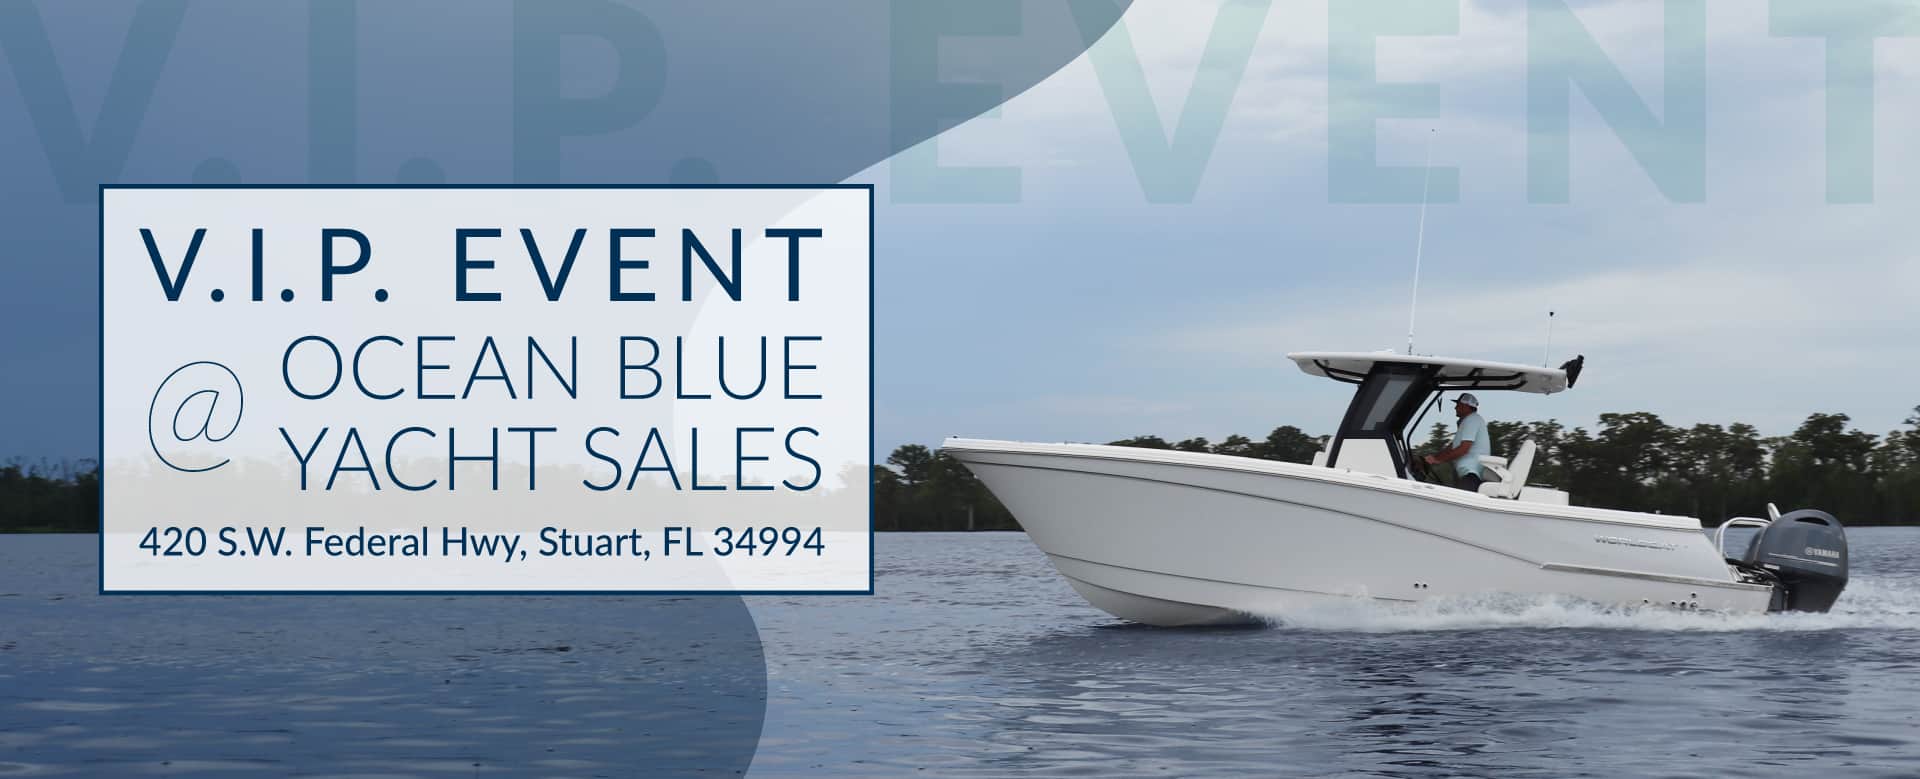 ocean blue yacht sales